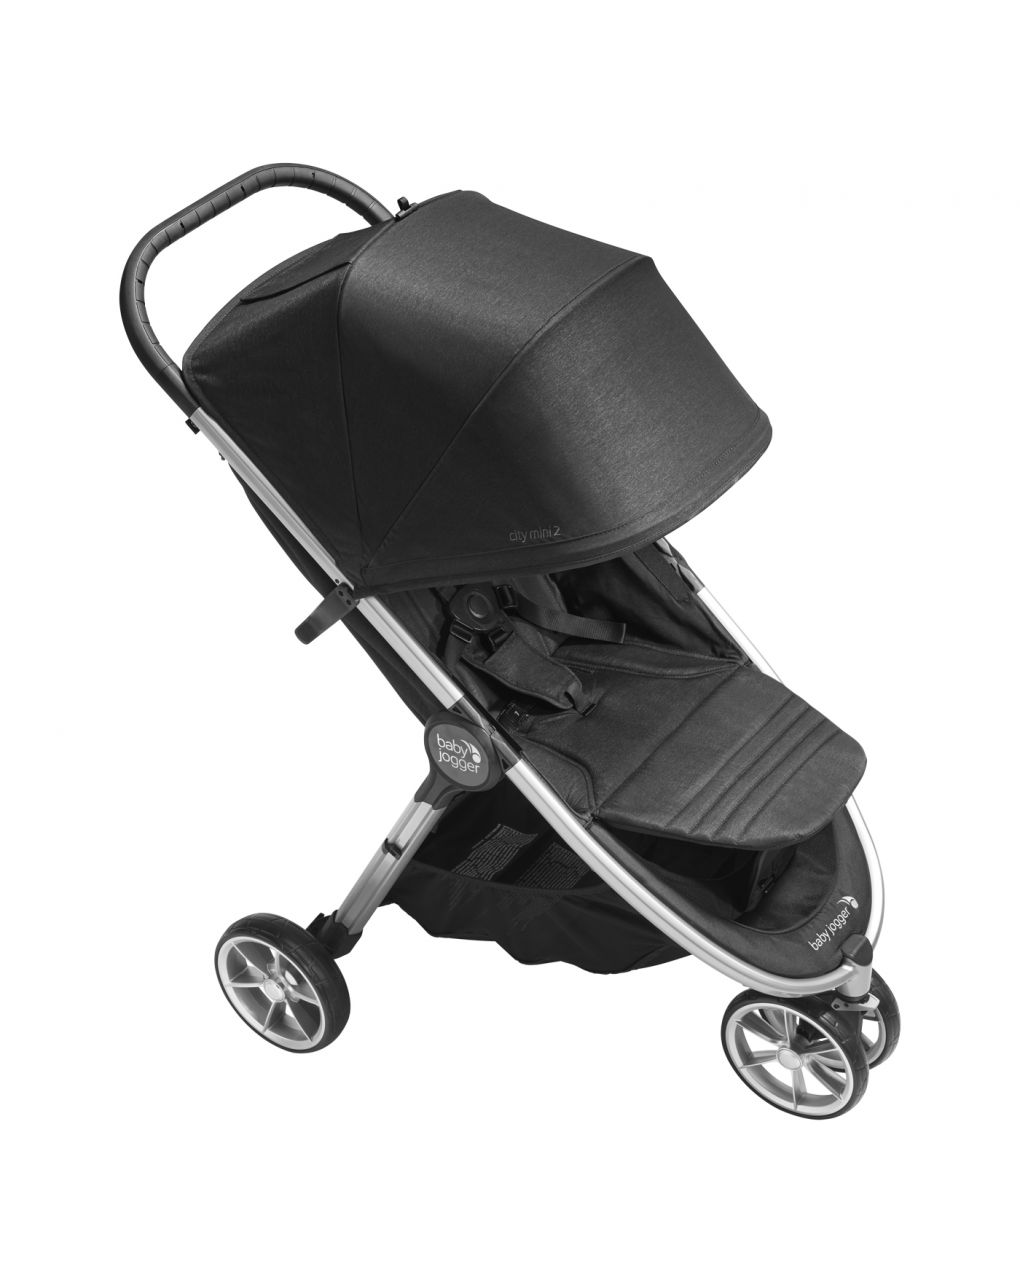 Carrinho baby jogger city mini2 3 rodas preto opulento - Baby Jogger